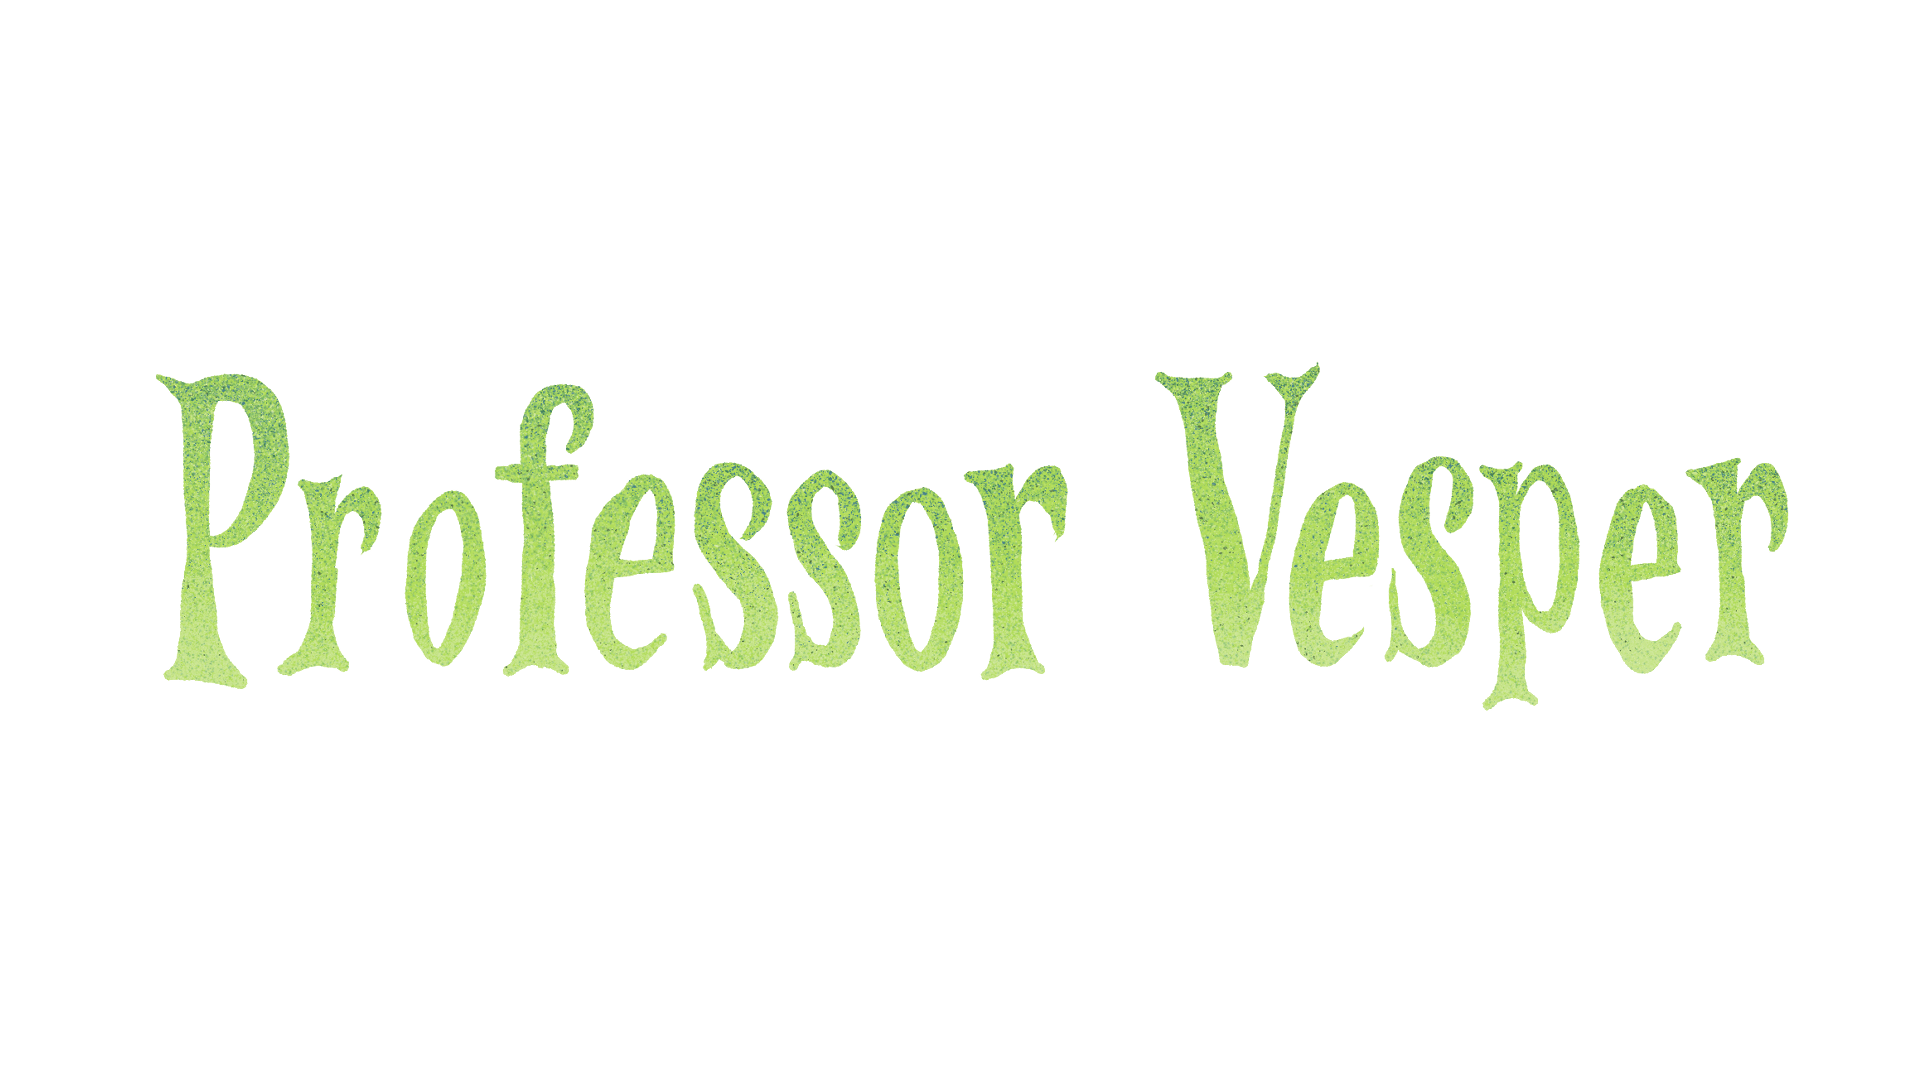 Professor Vesper